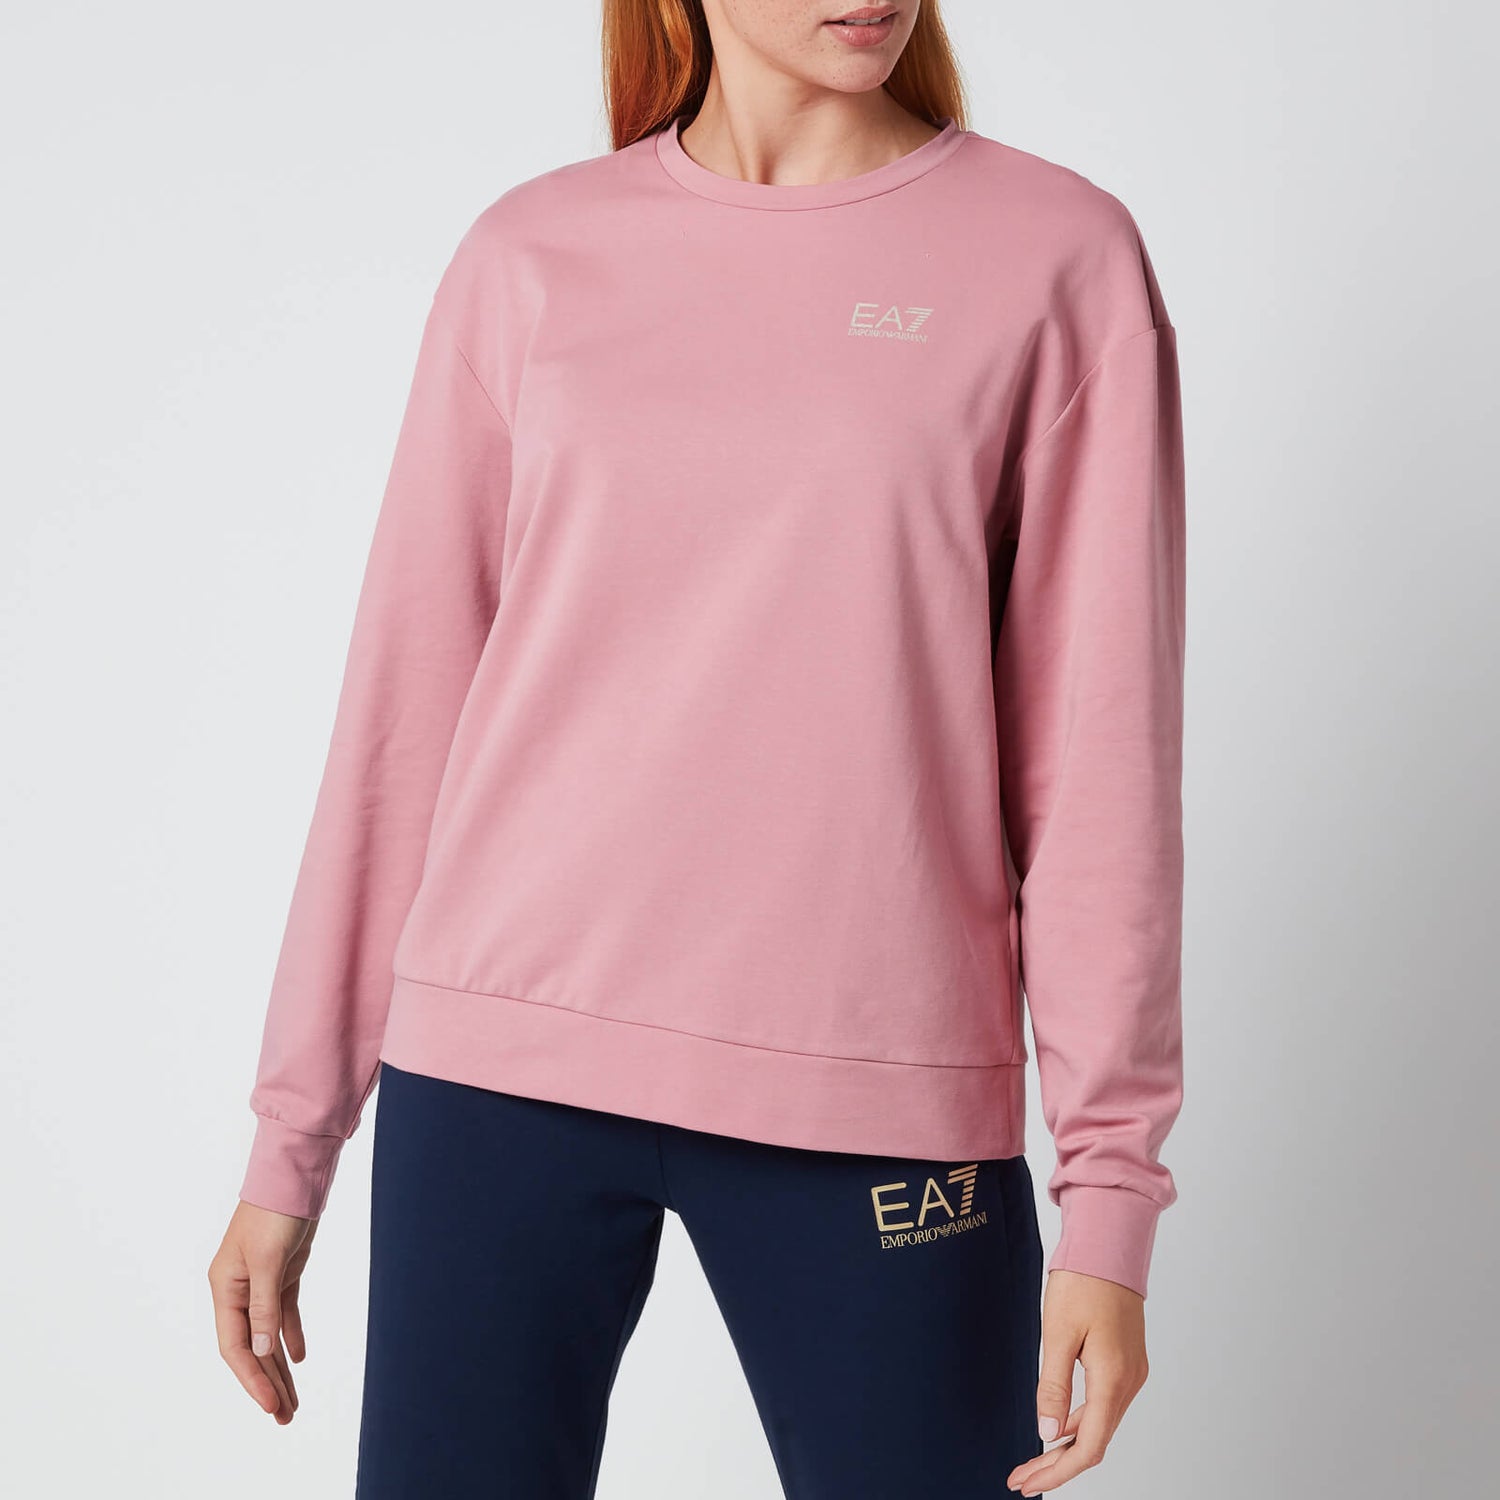 Emporio Armani EA7 Women's Train Shiny T-Top Sweatshirt - Fox Glove/Light Gold